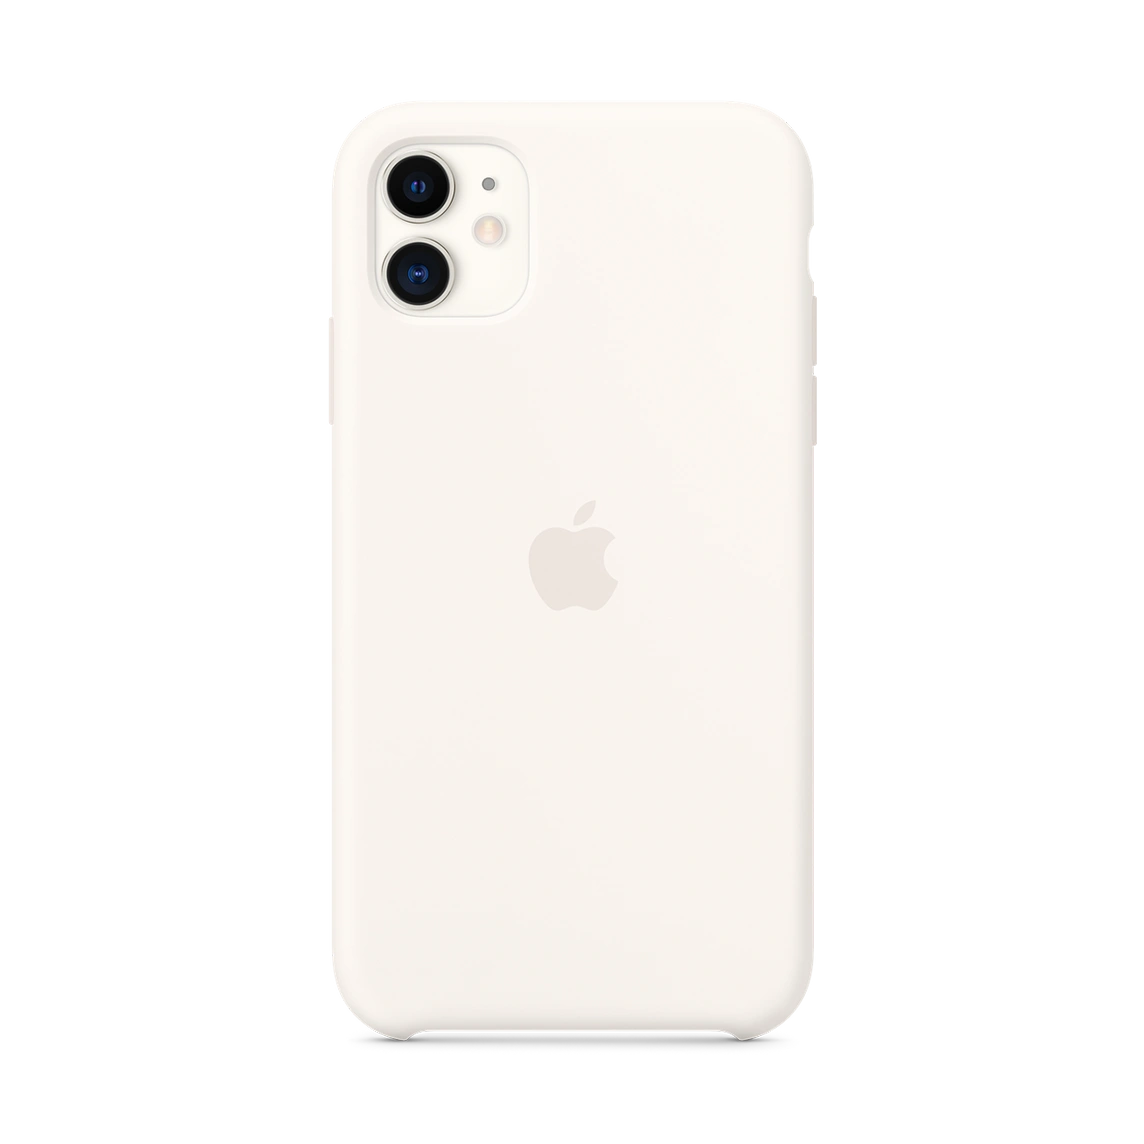 Apple iPhone 11 Silicone Case